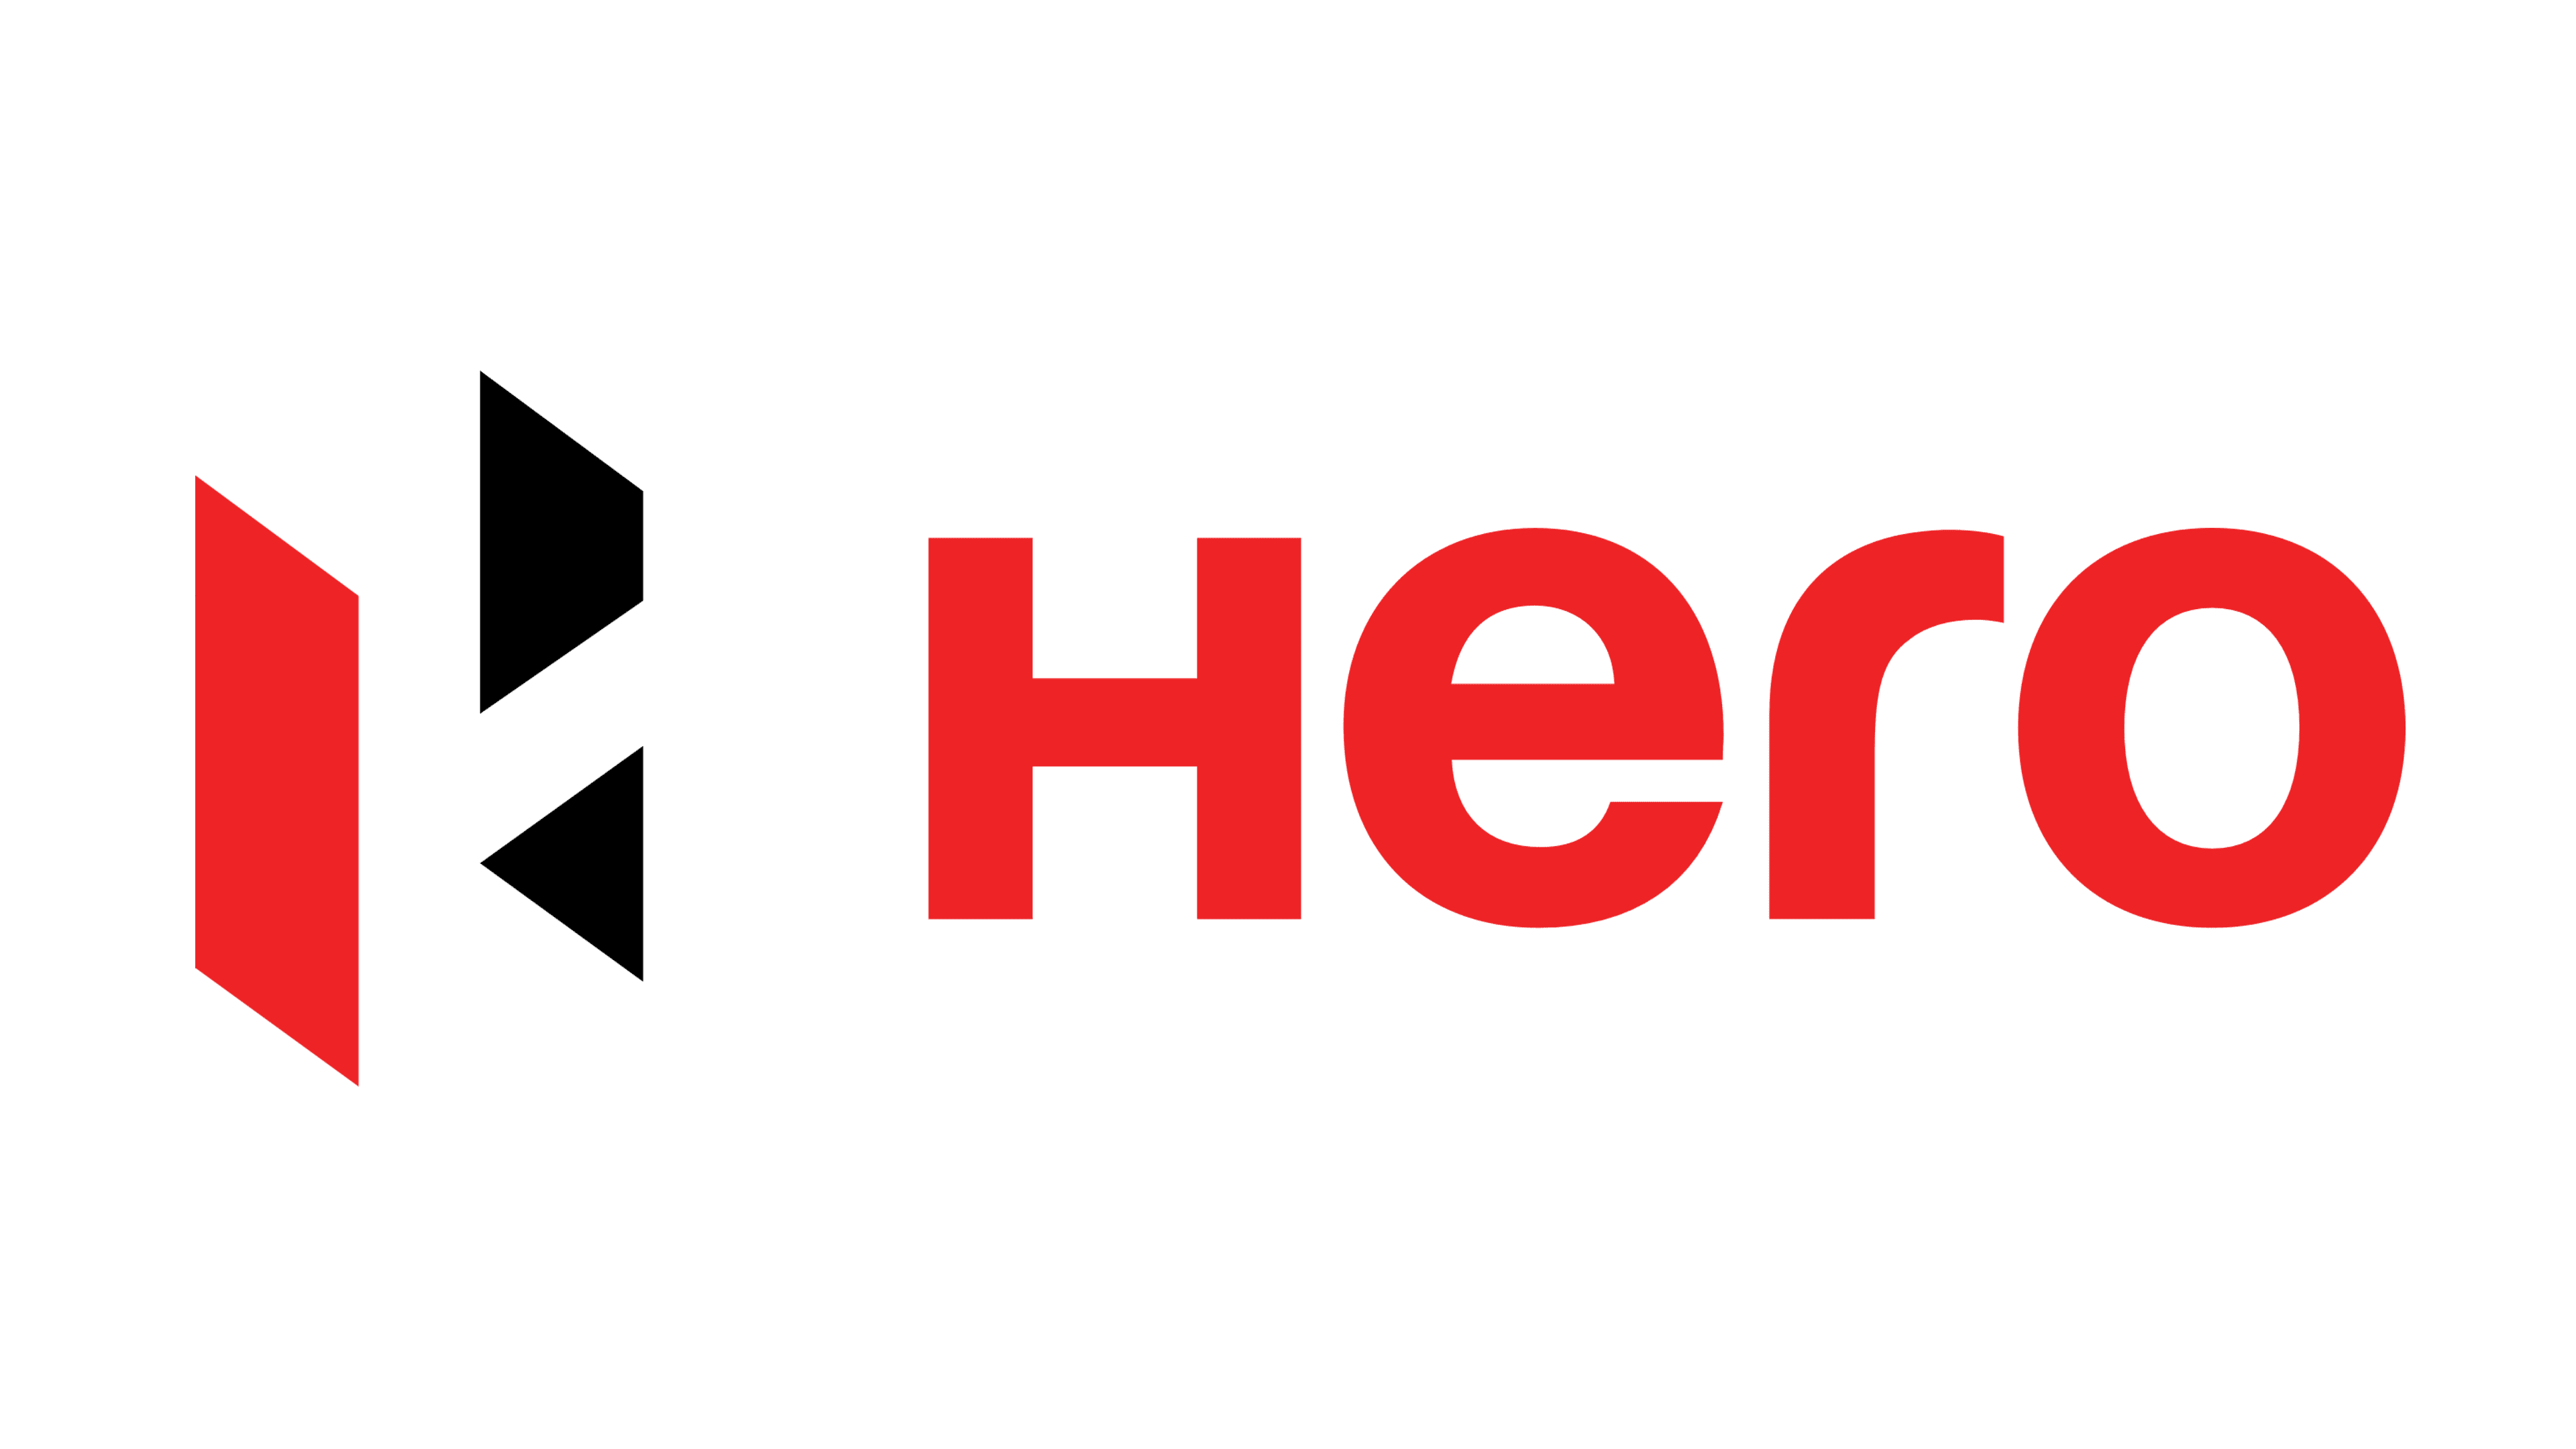 1,062 Super Hero Logo Black White Images, Stock Photos & Vectors |  Shutterstock